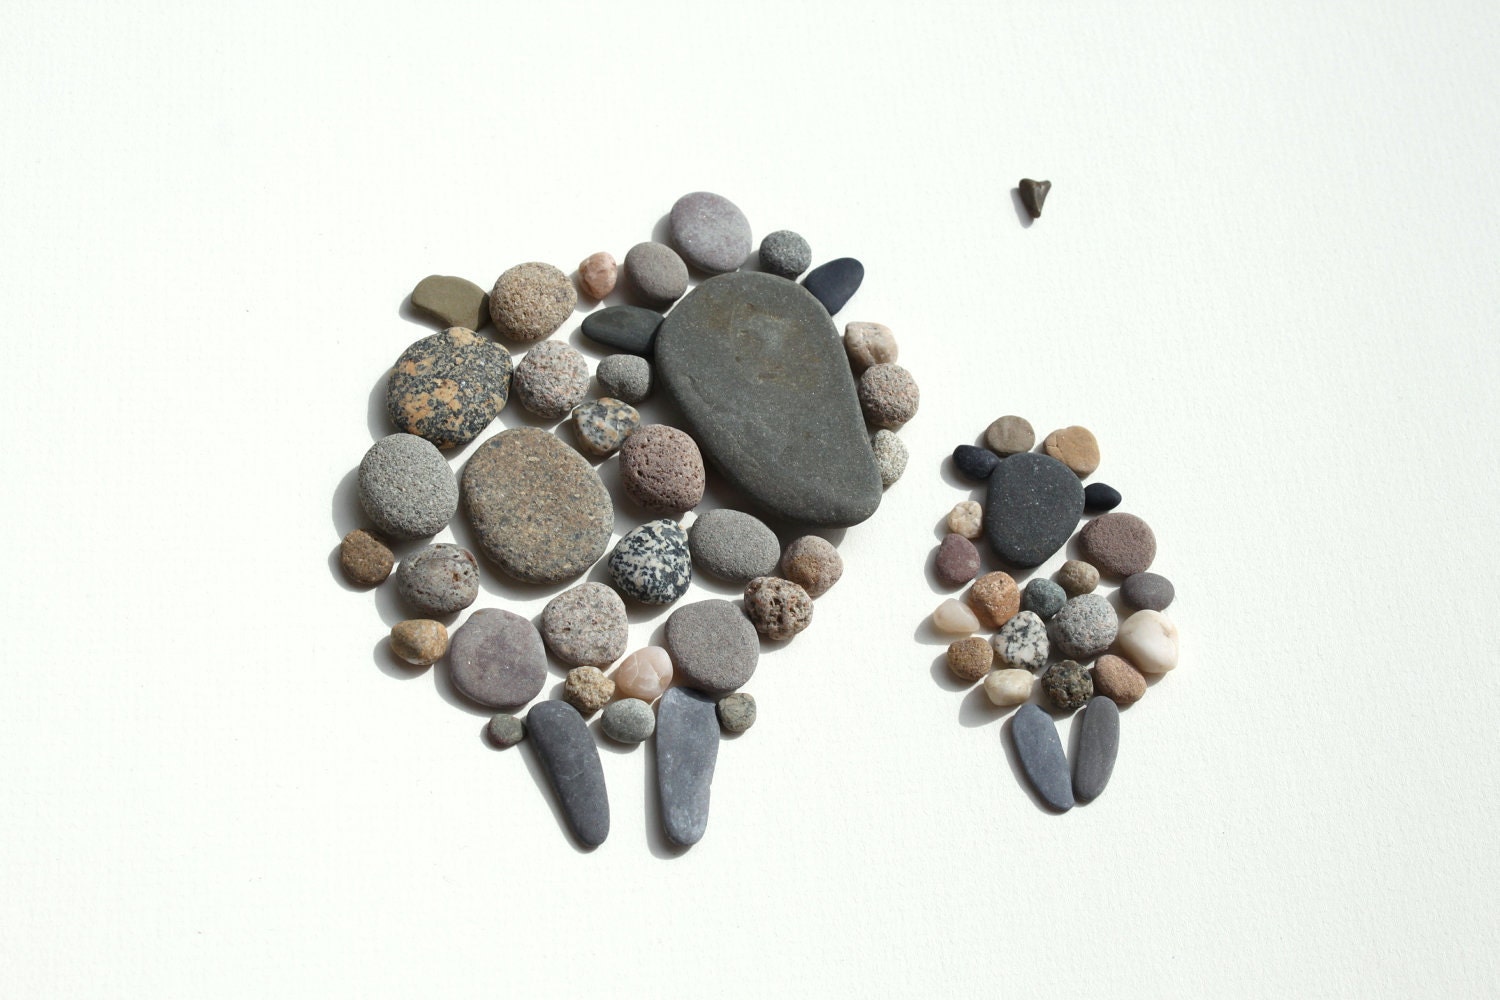 Pebble Art of Nova Scotia, by Sharon Nowlan